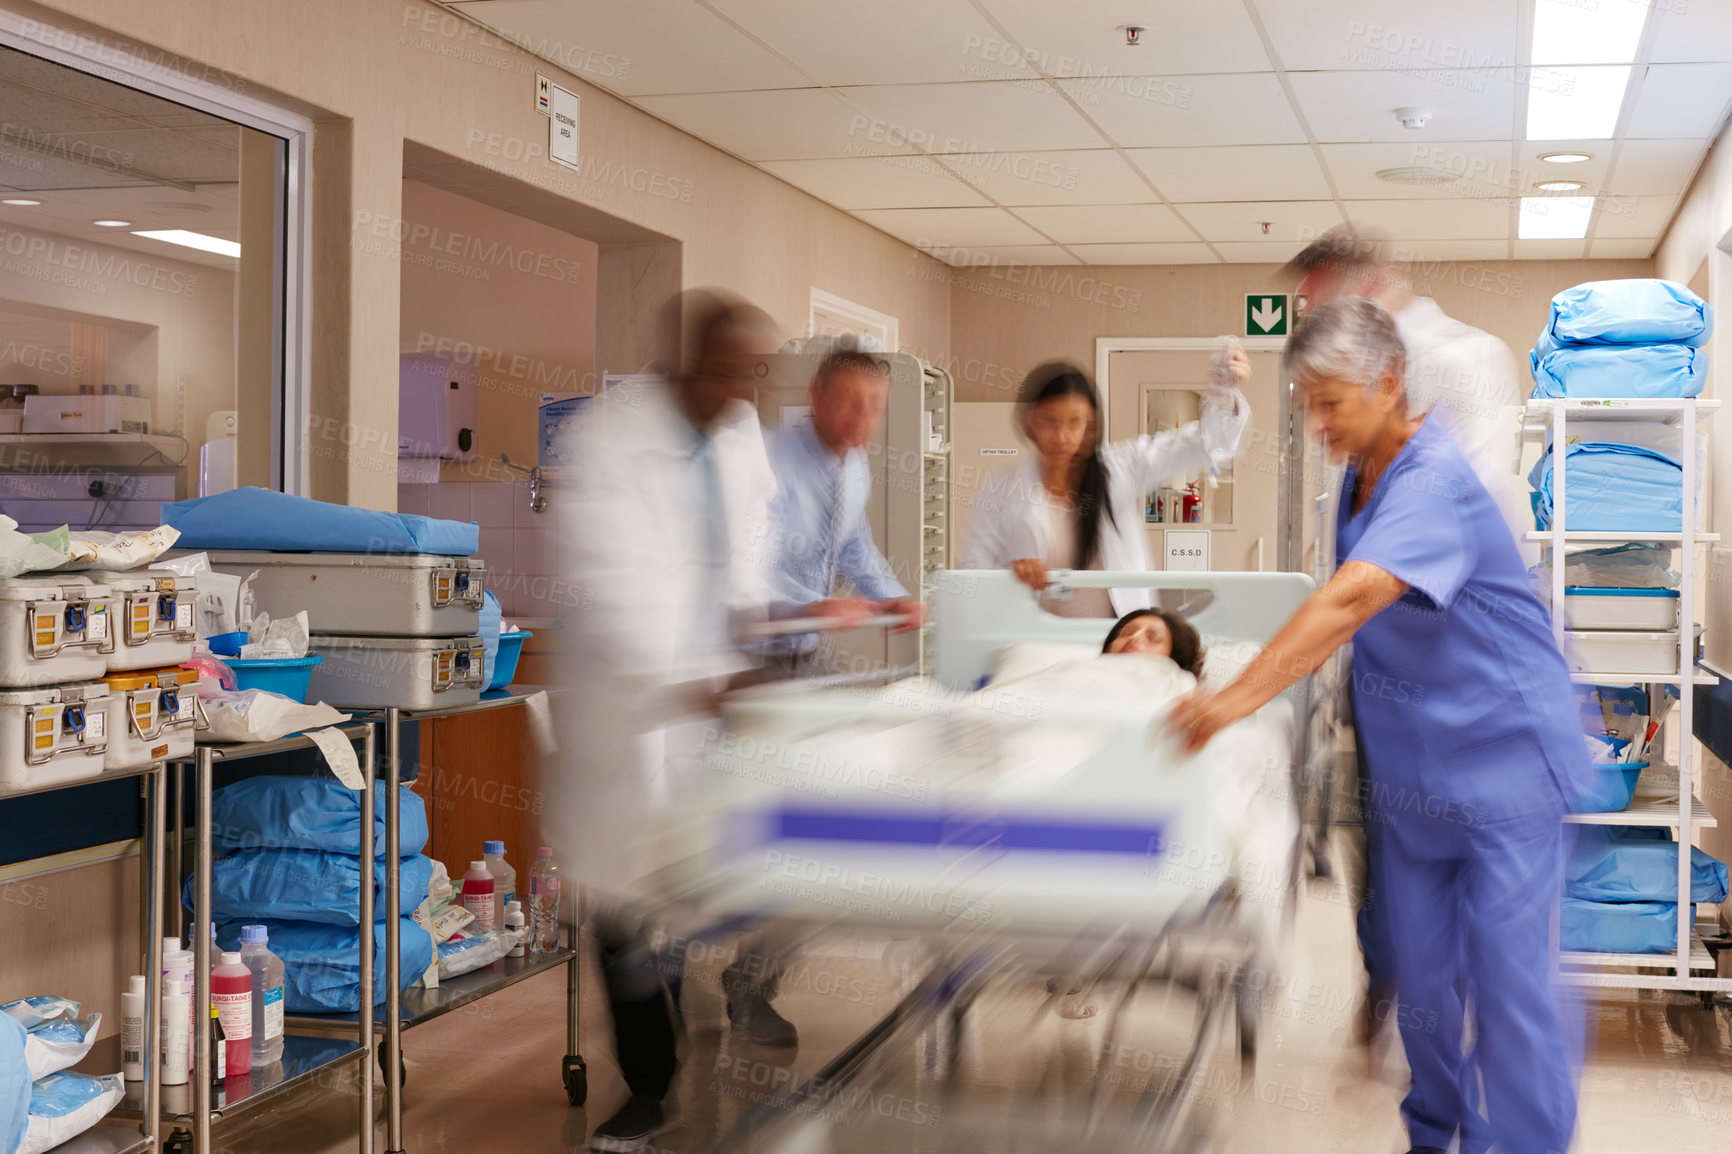 Buy stock photo Shot of a medical teamrushing a gurney through a hospital corridor